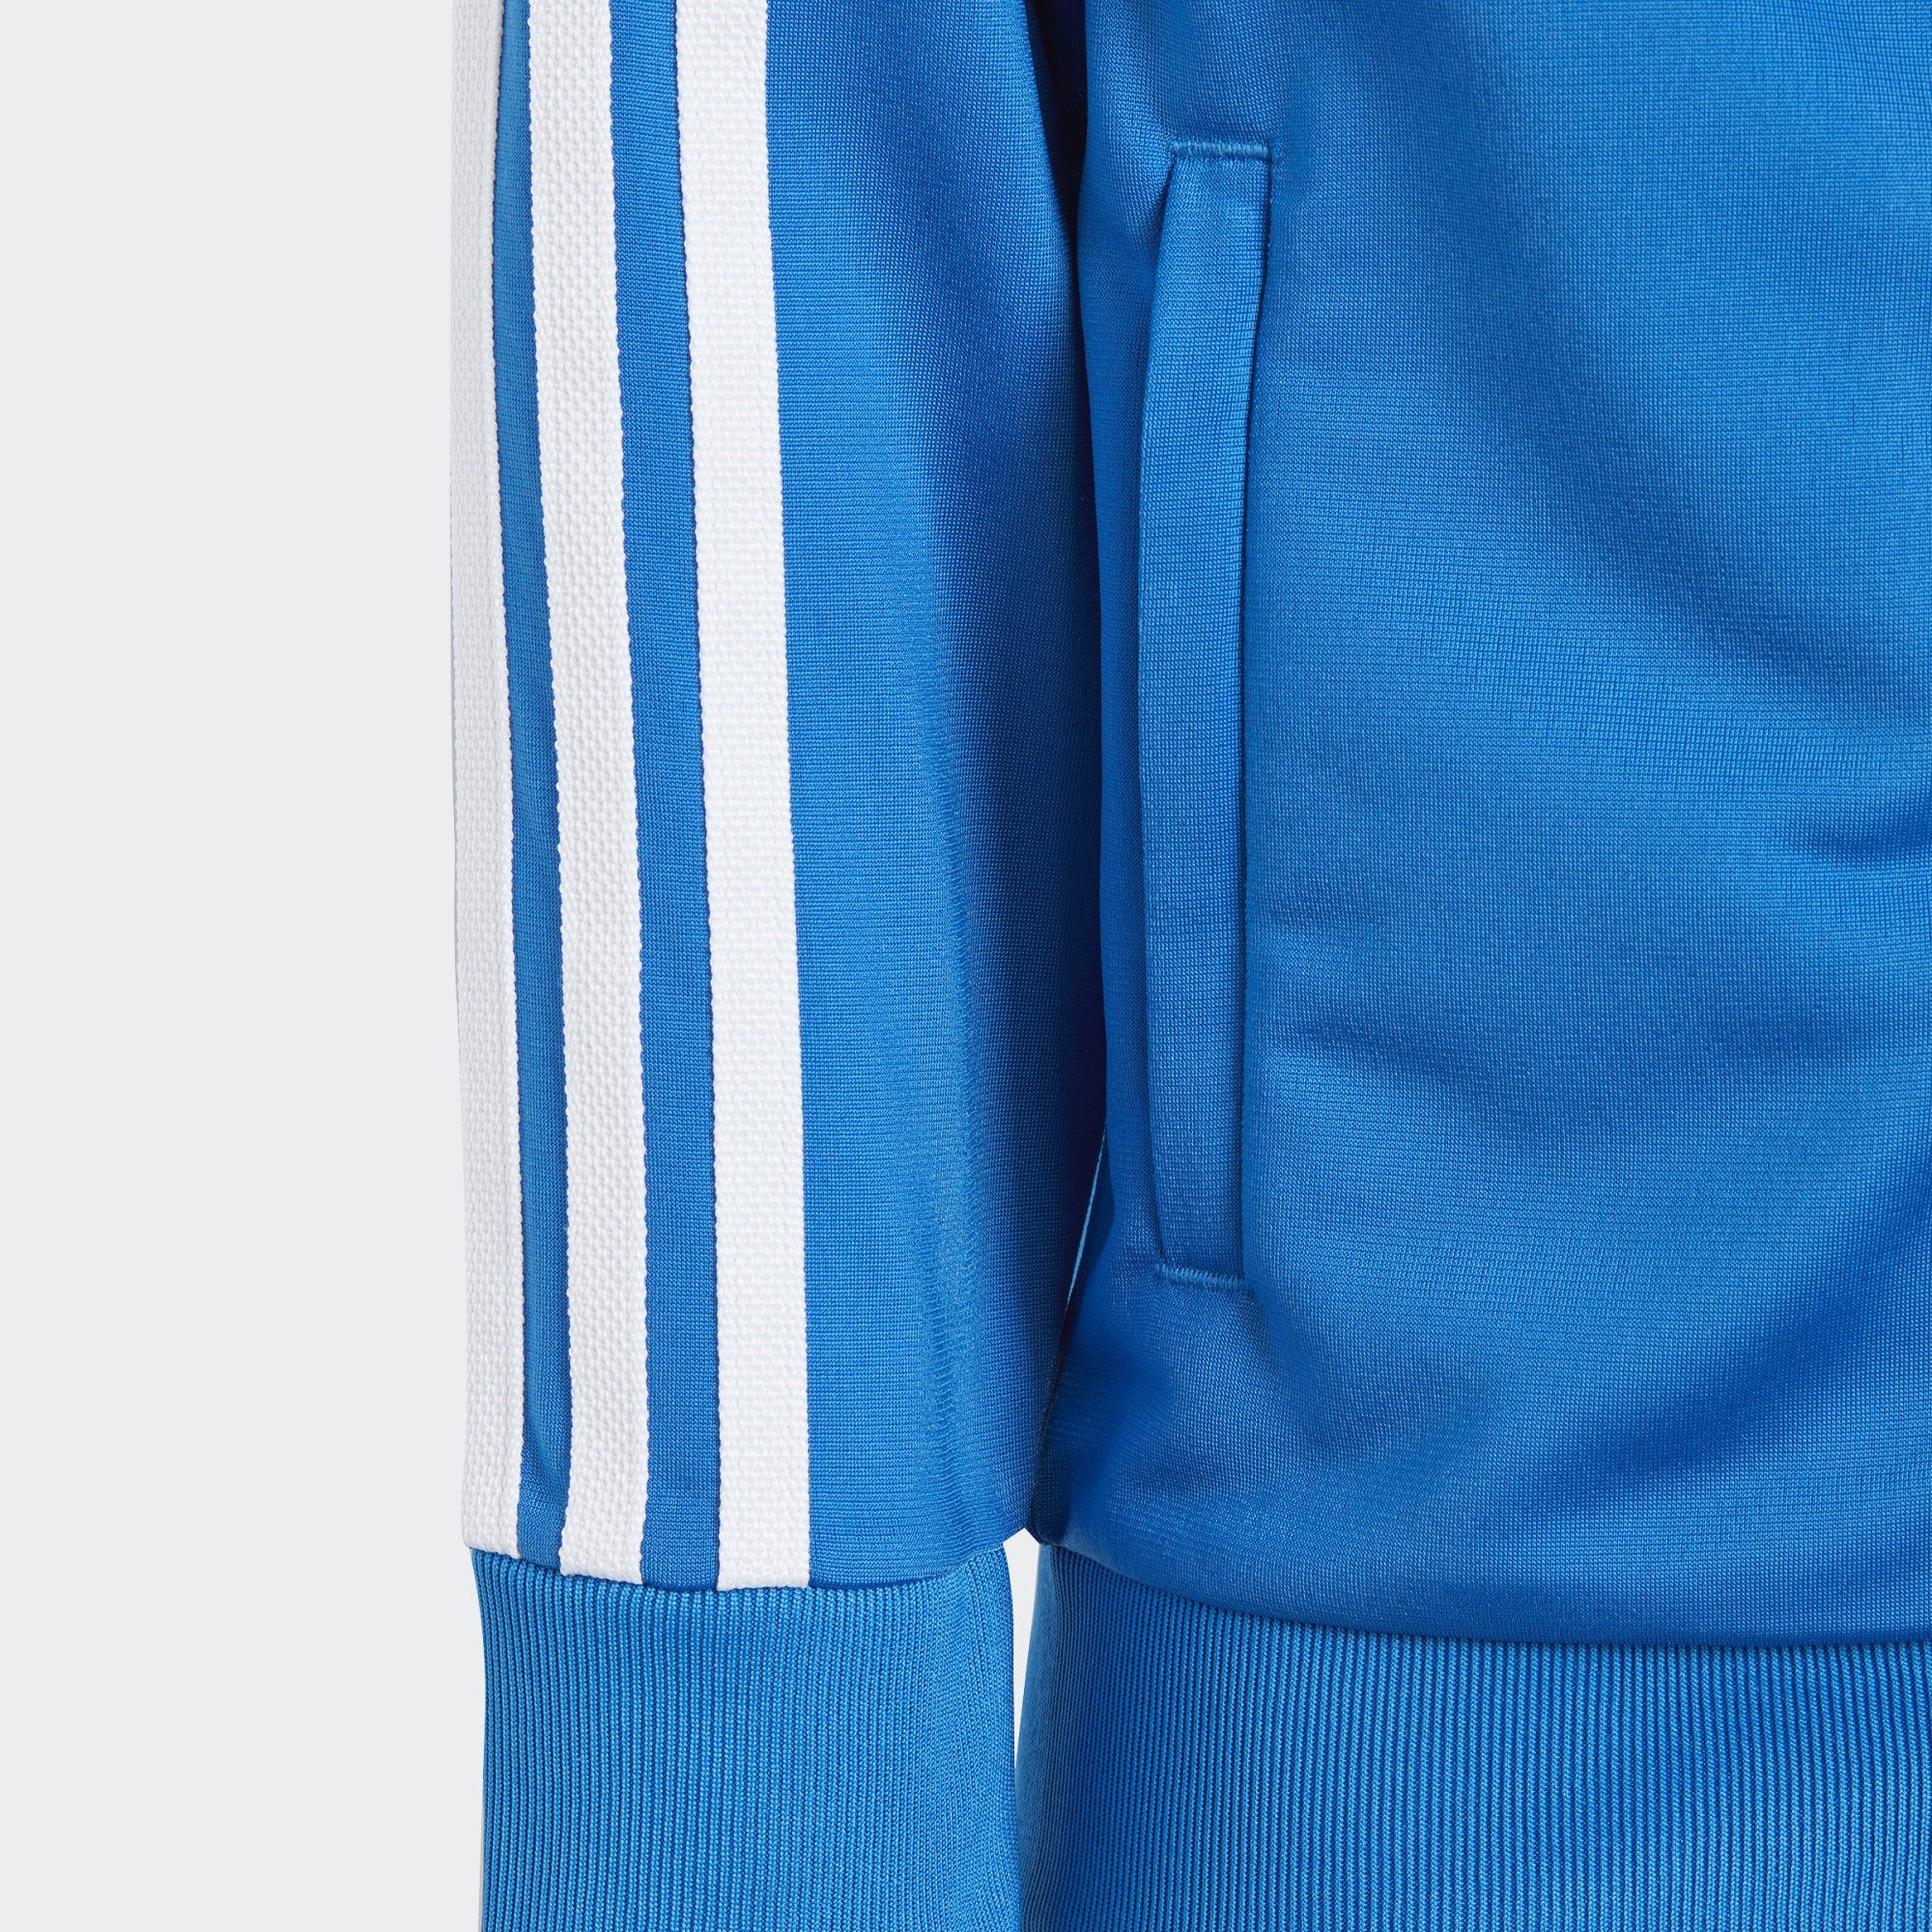 TRAININGSANZUG SST Sportanzug ADICOLOR Bird Blue adidas Originals